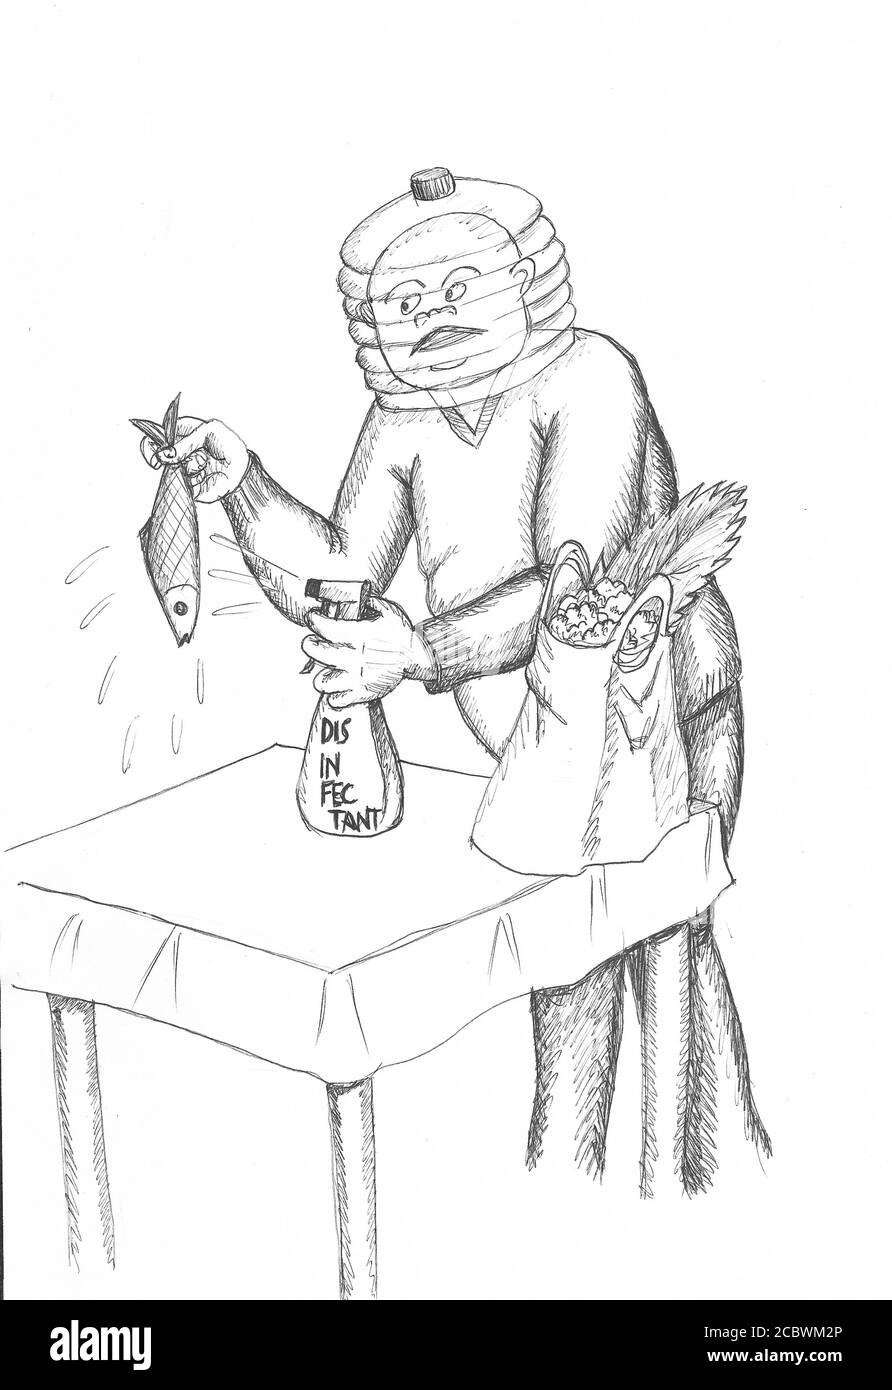 Hypochondriac man disinfecting a sardine. Illustration. Stock Photo